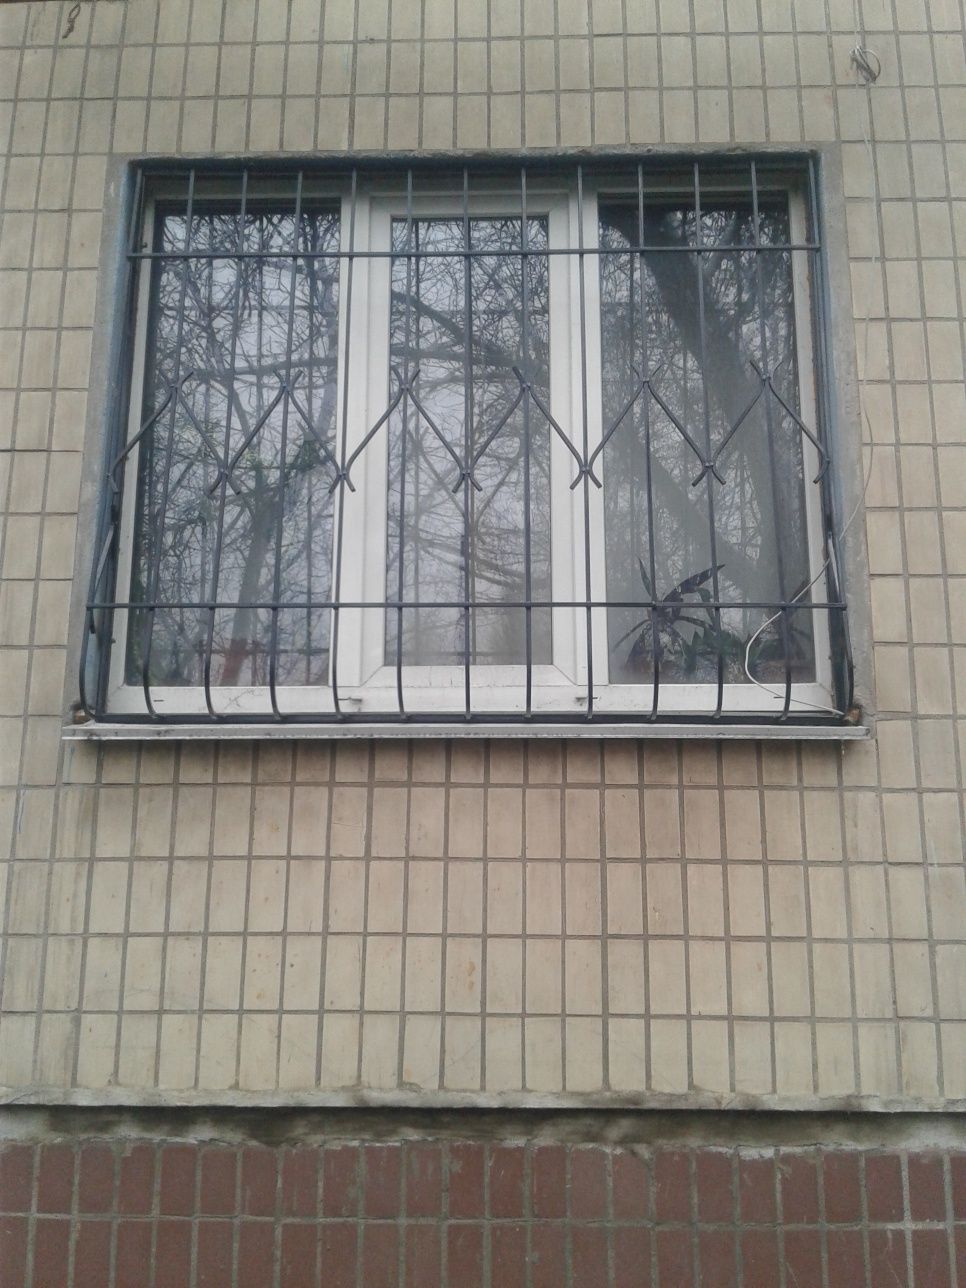 Решетки на окна не дорого